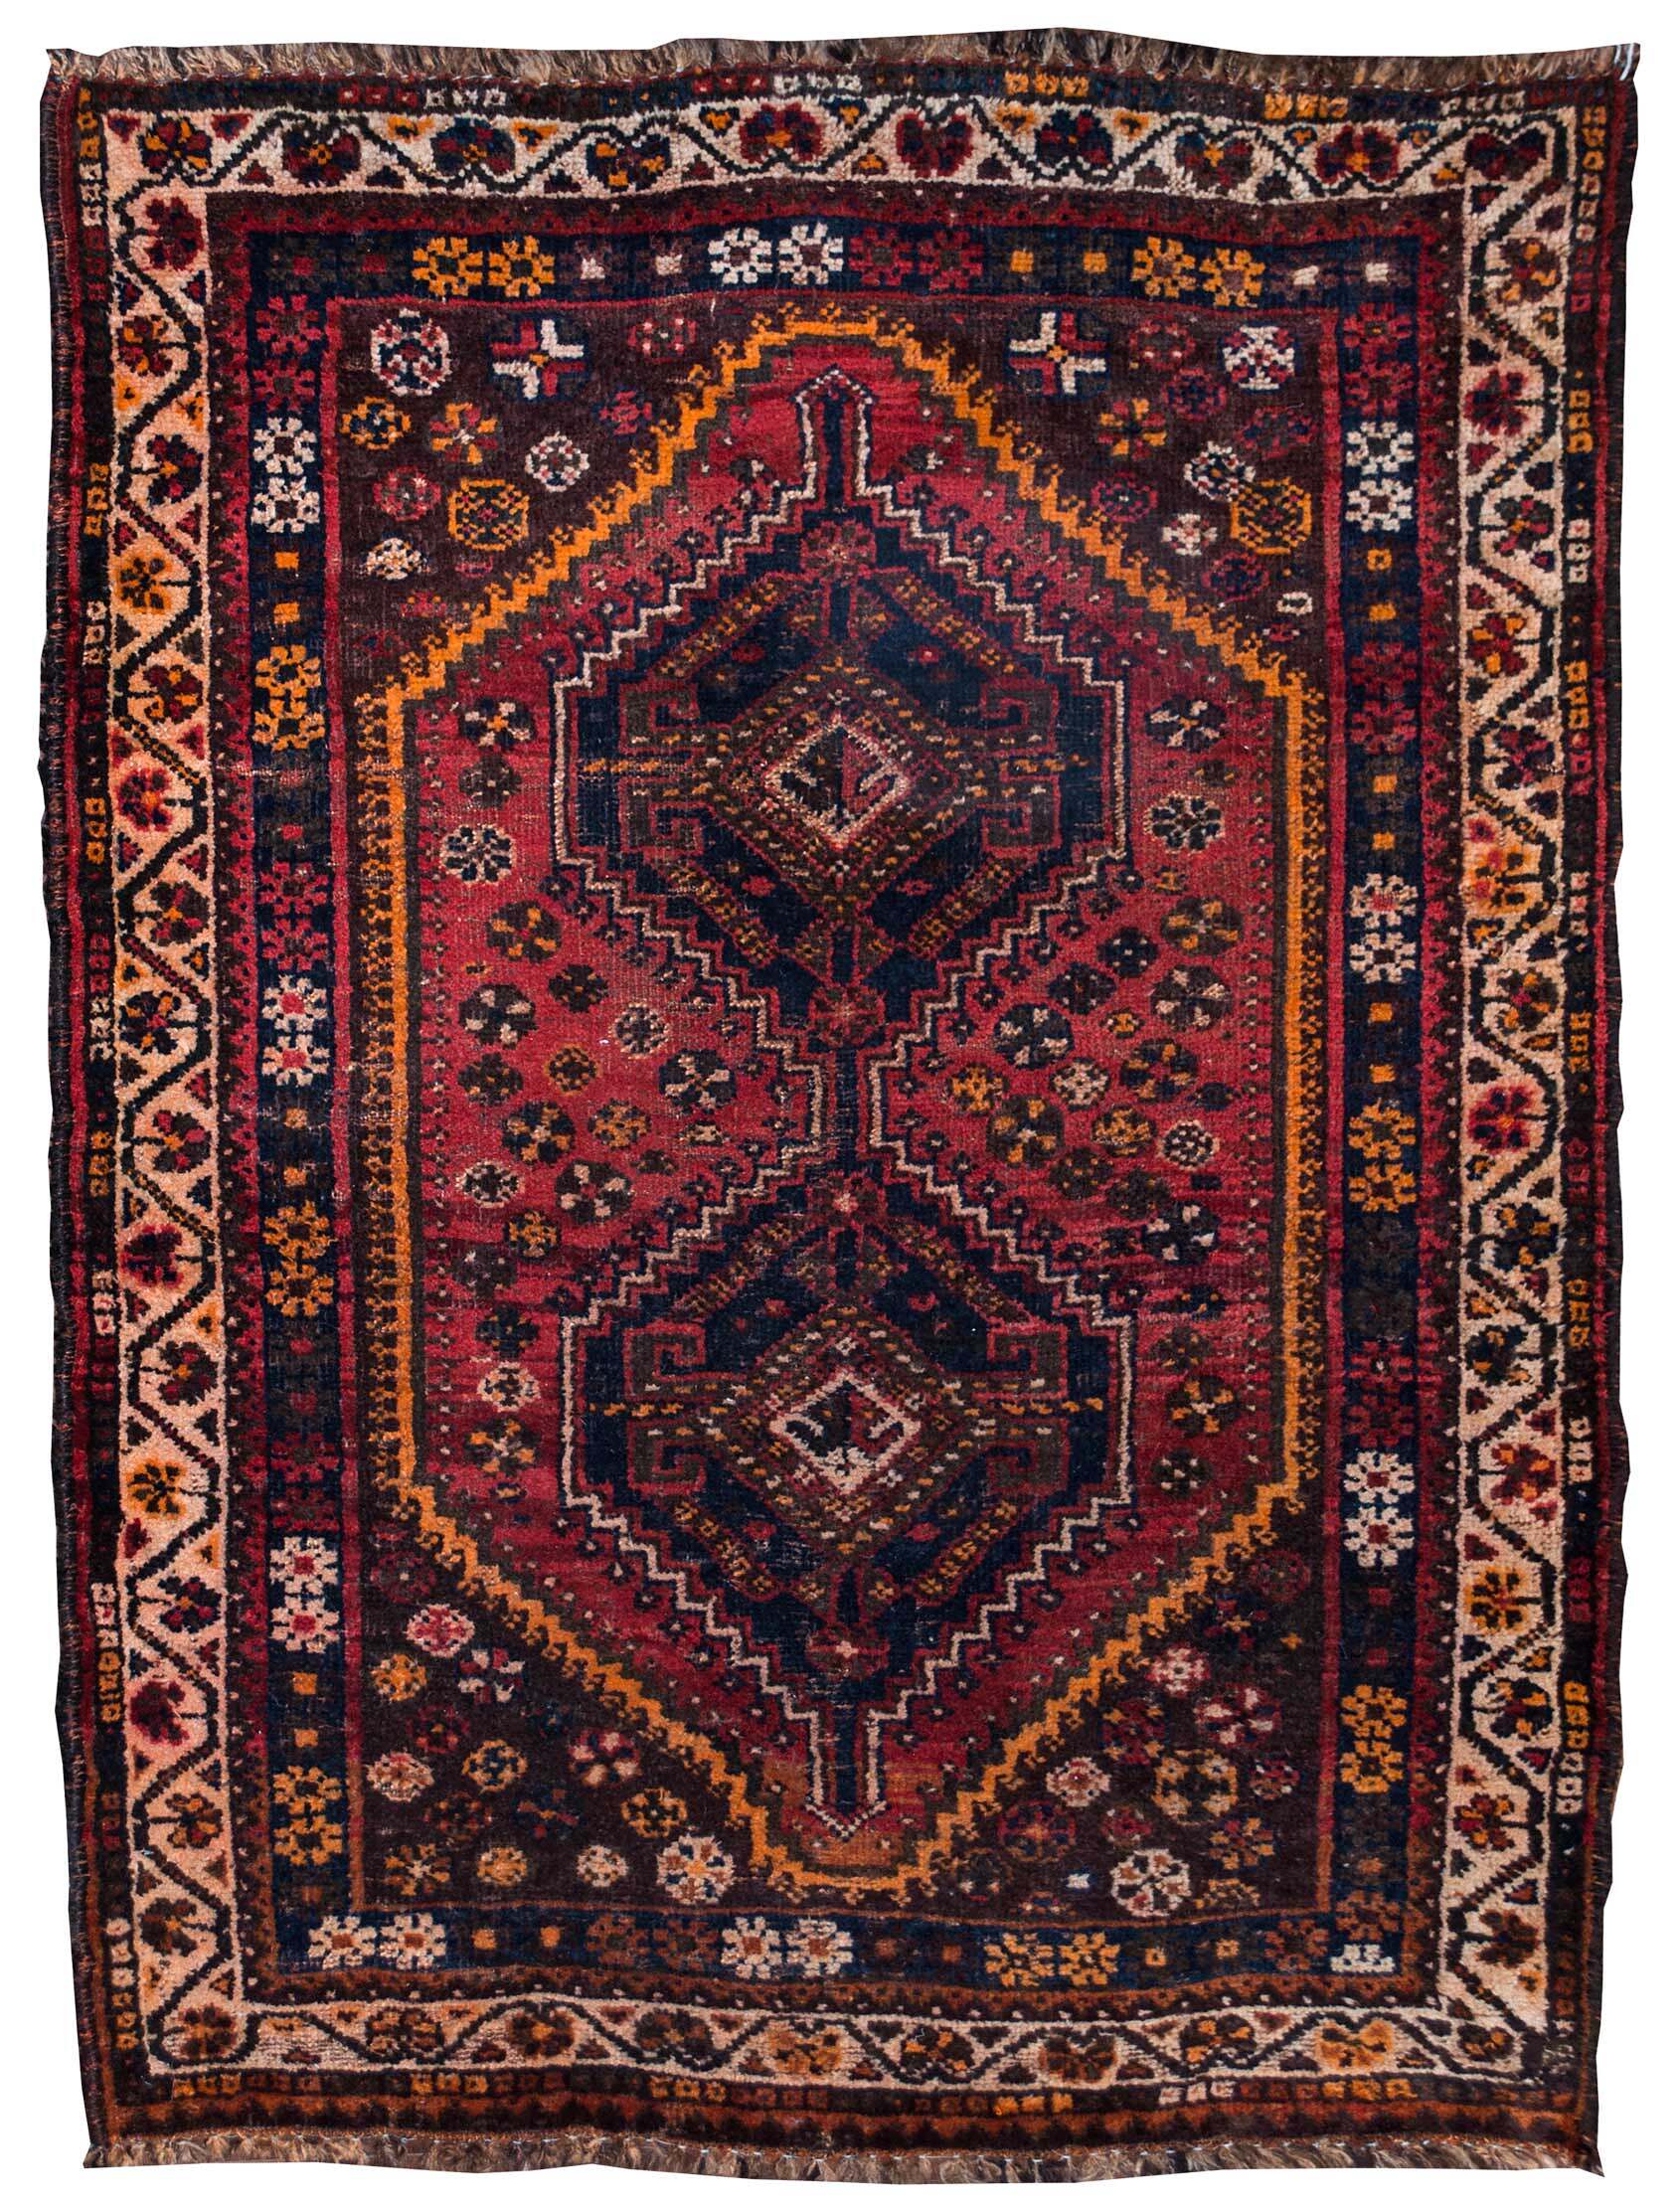 het ergste Feest Zichzelf Shiraz Tribal Geometric Hand Made Rug - Vintage 4 by 5